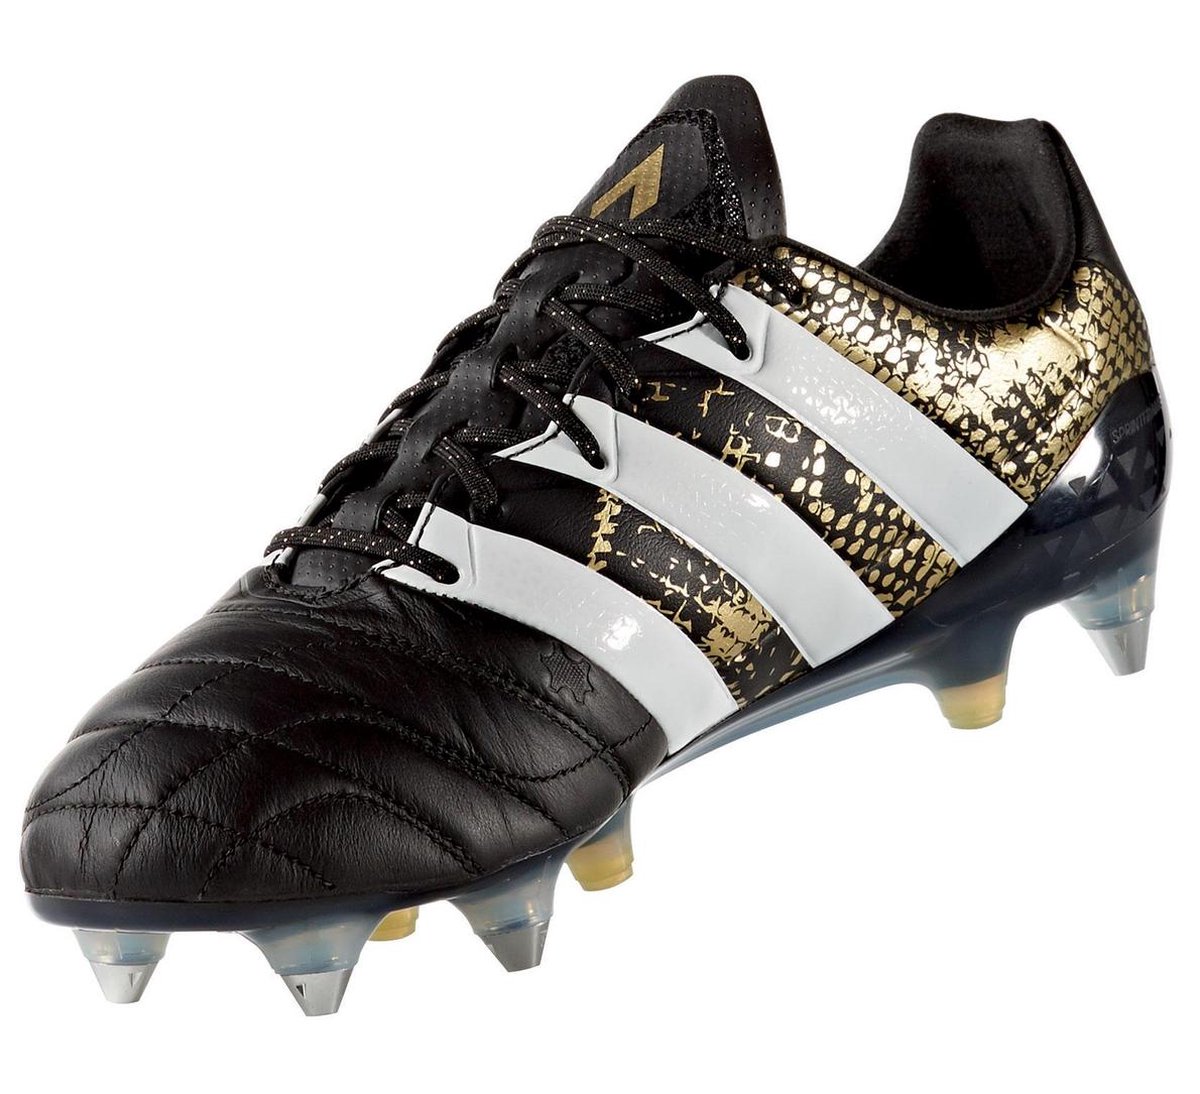 adidas ACE 16.1 SG Voetbalschoenen - Maat 42 2/3 - Mannen - zwart/wit/goud  | bol